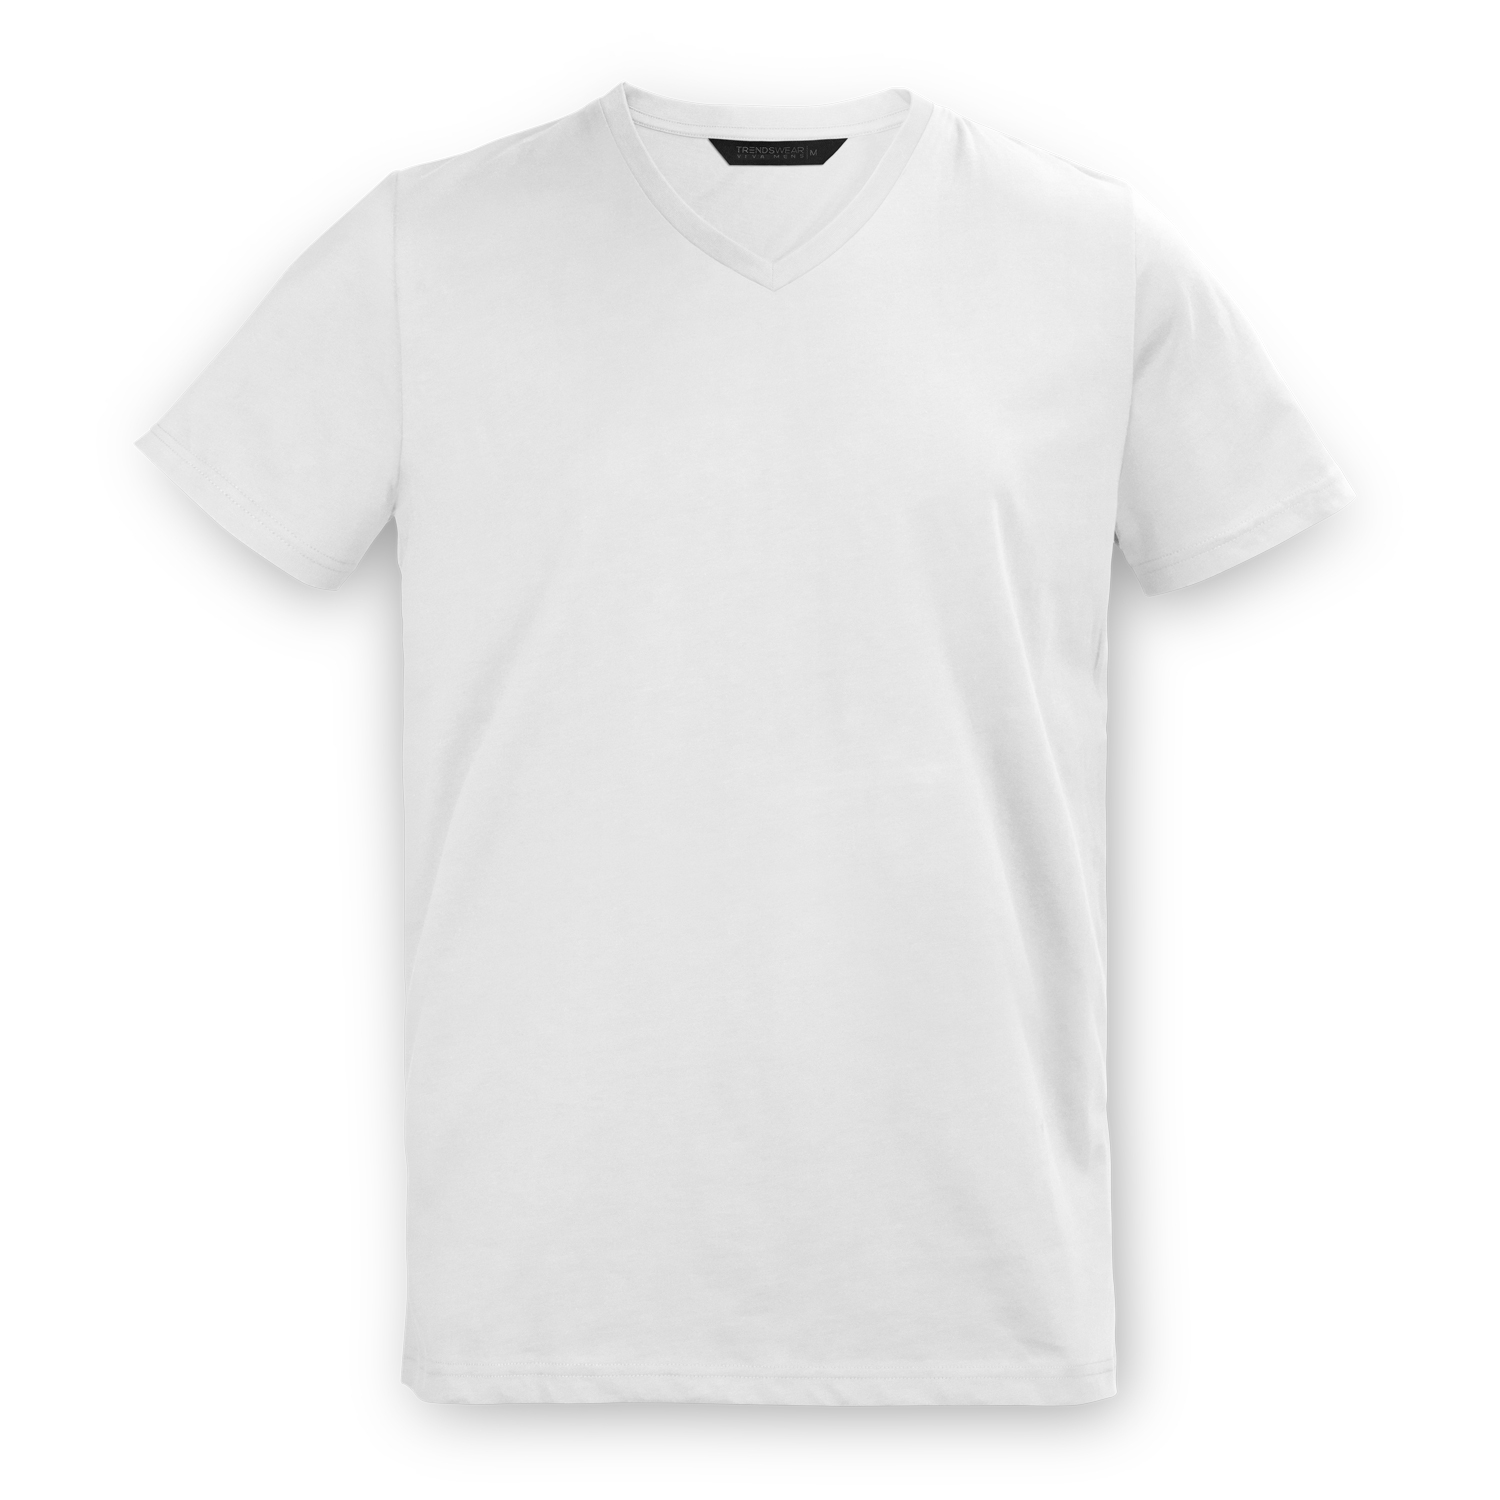 TRENDS | TRENDSWEAR Viva Men's T-Shirt